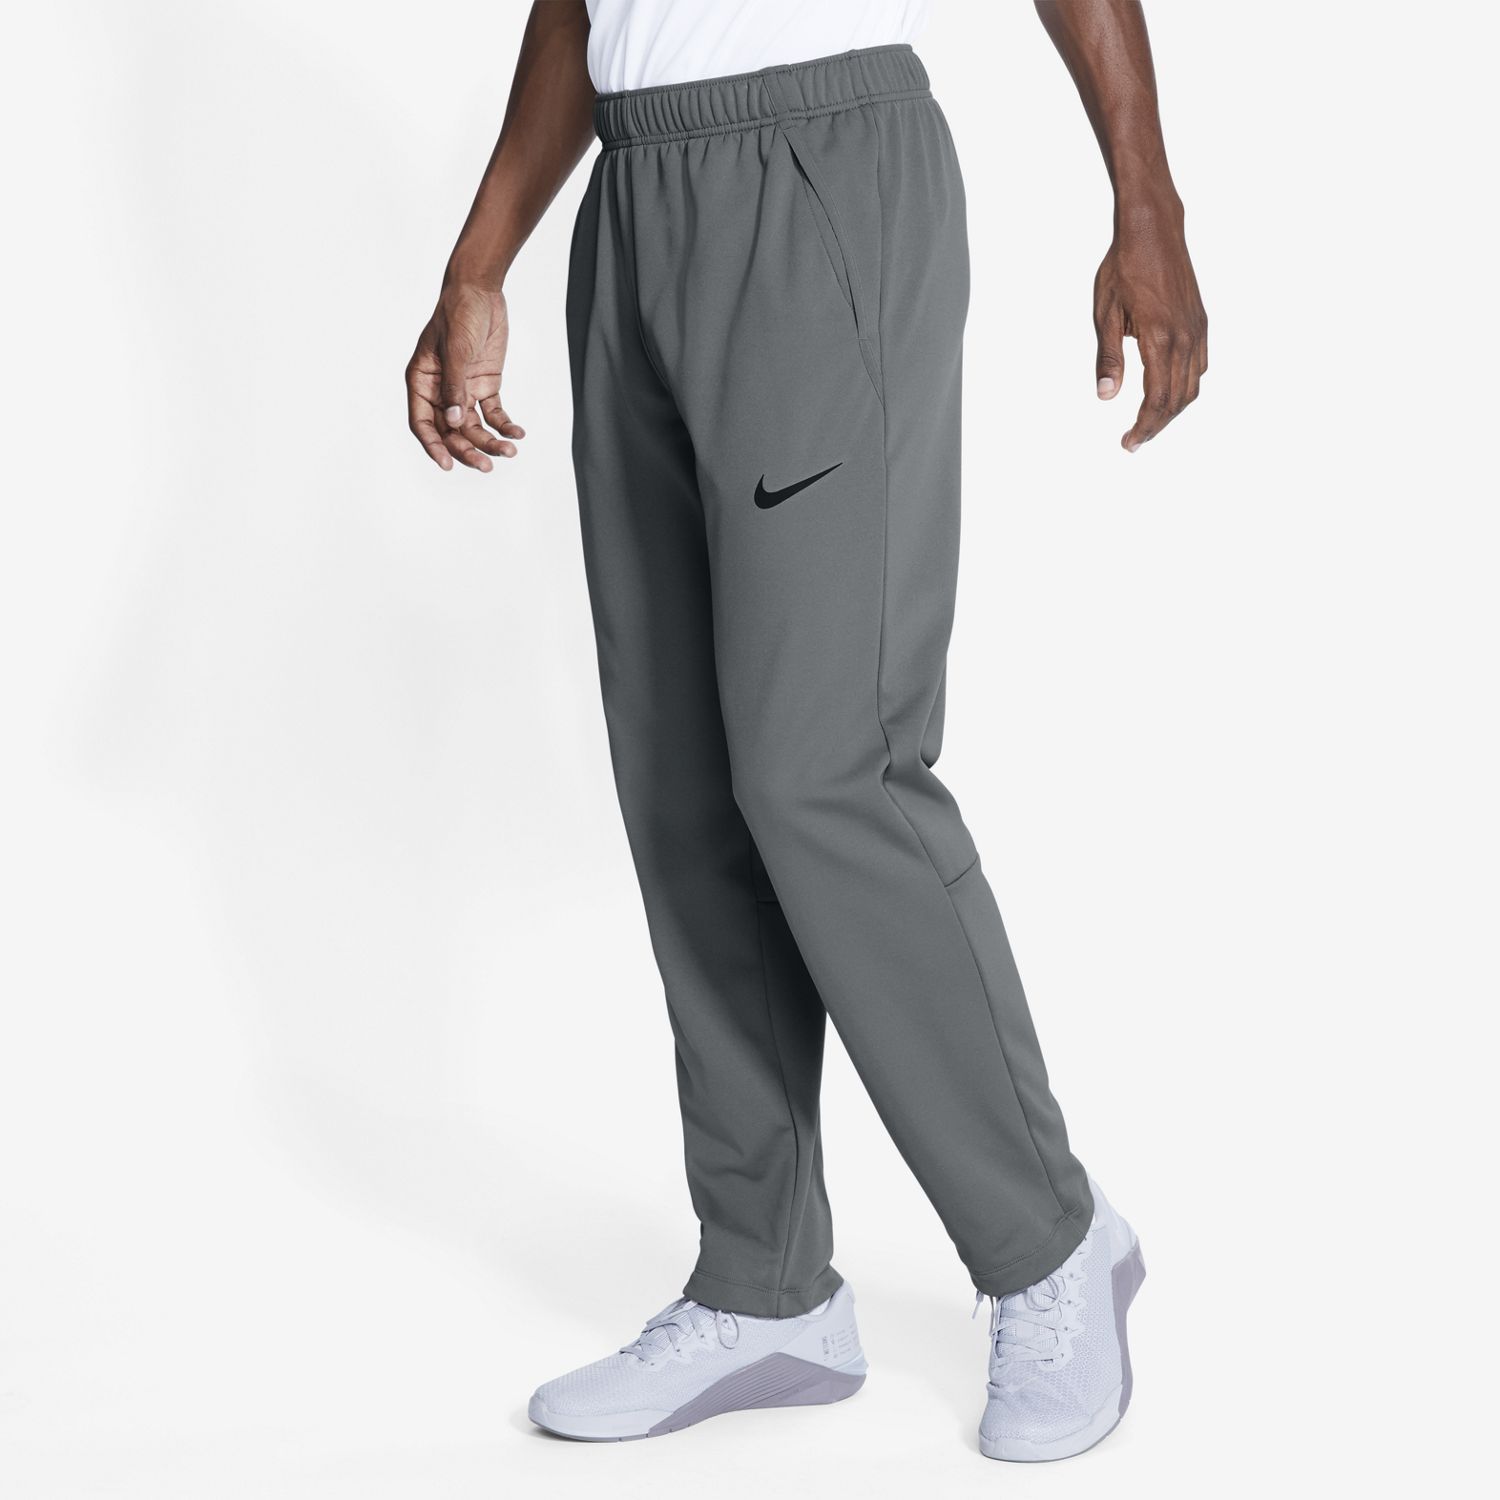 Mens Nike Pants: Large Selection of 